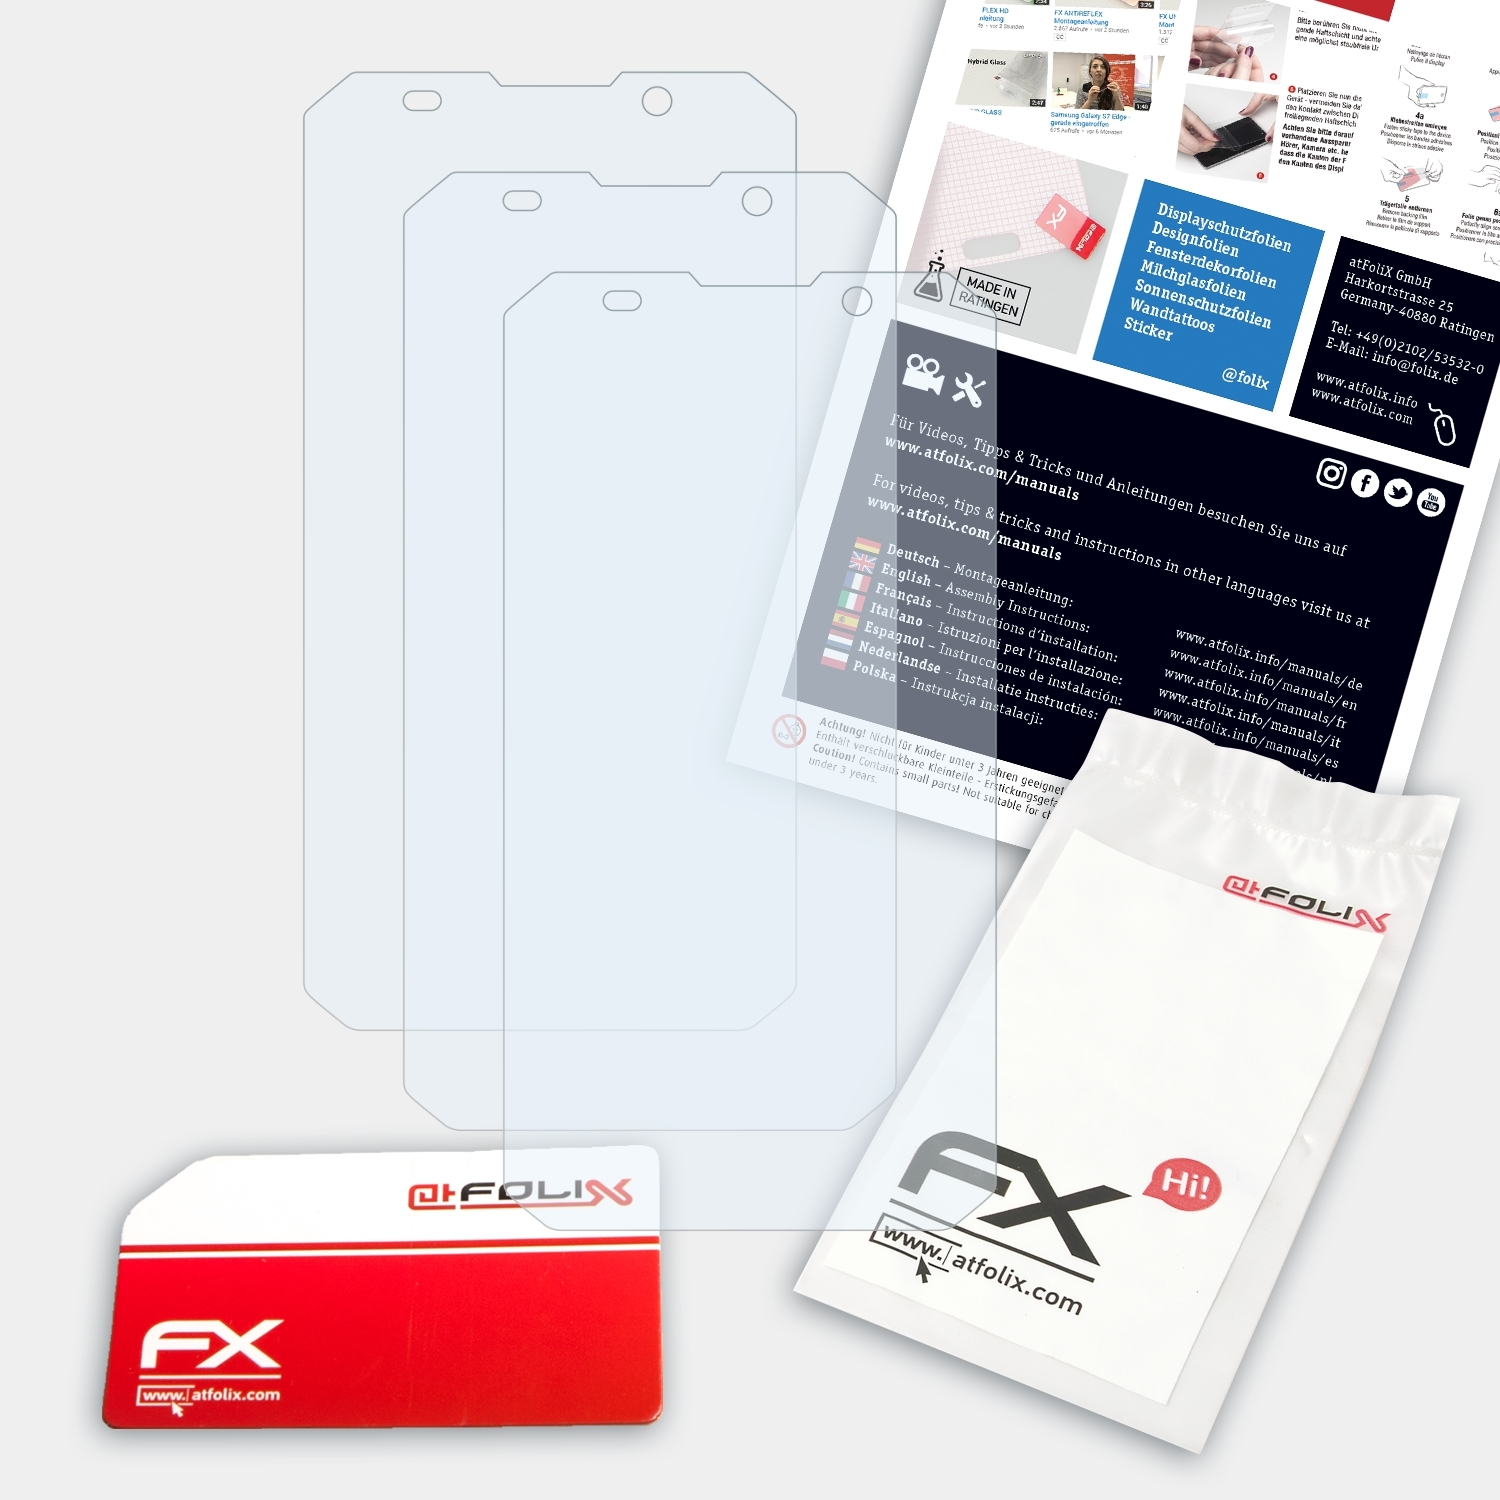 ATFOLIX 3x Displayschutz(für E&L FX-Clear W9)